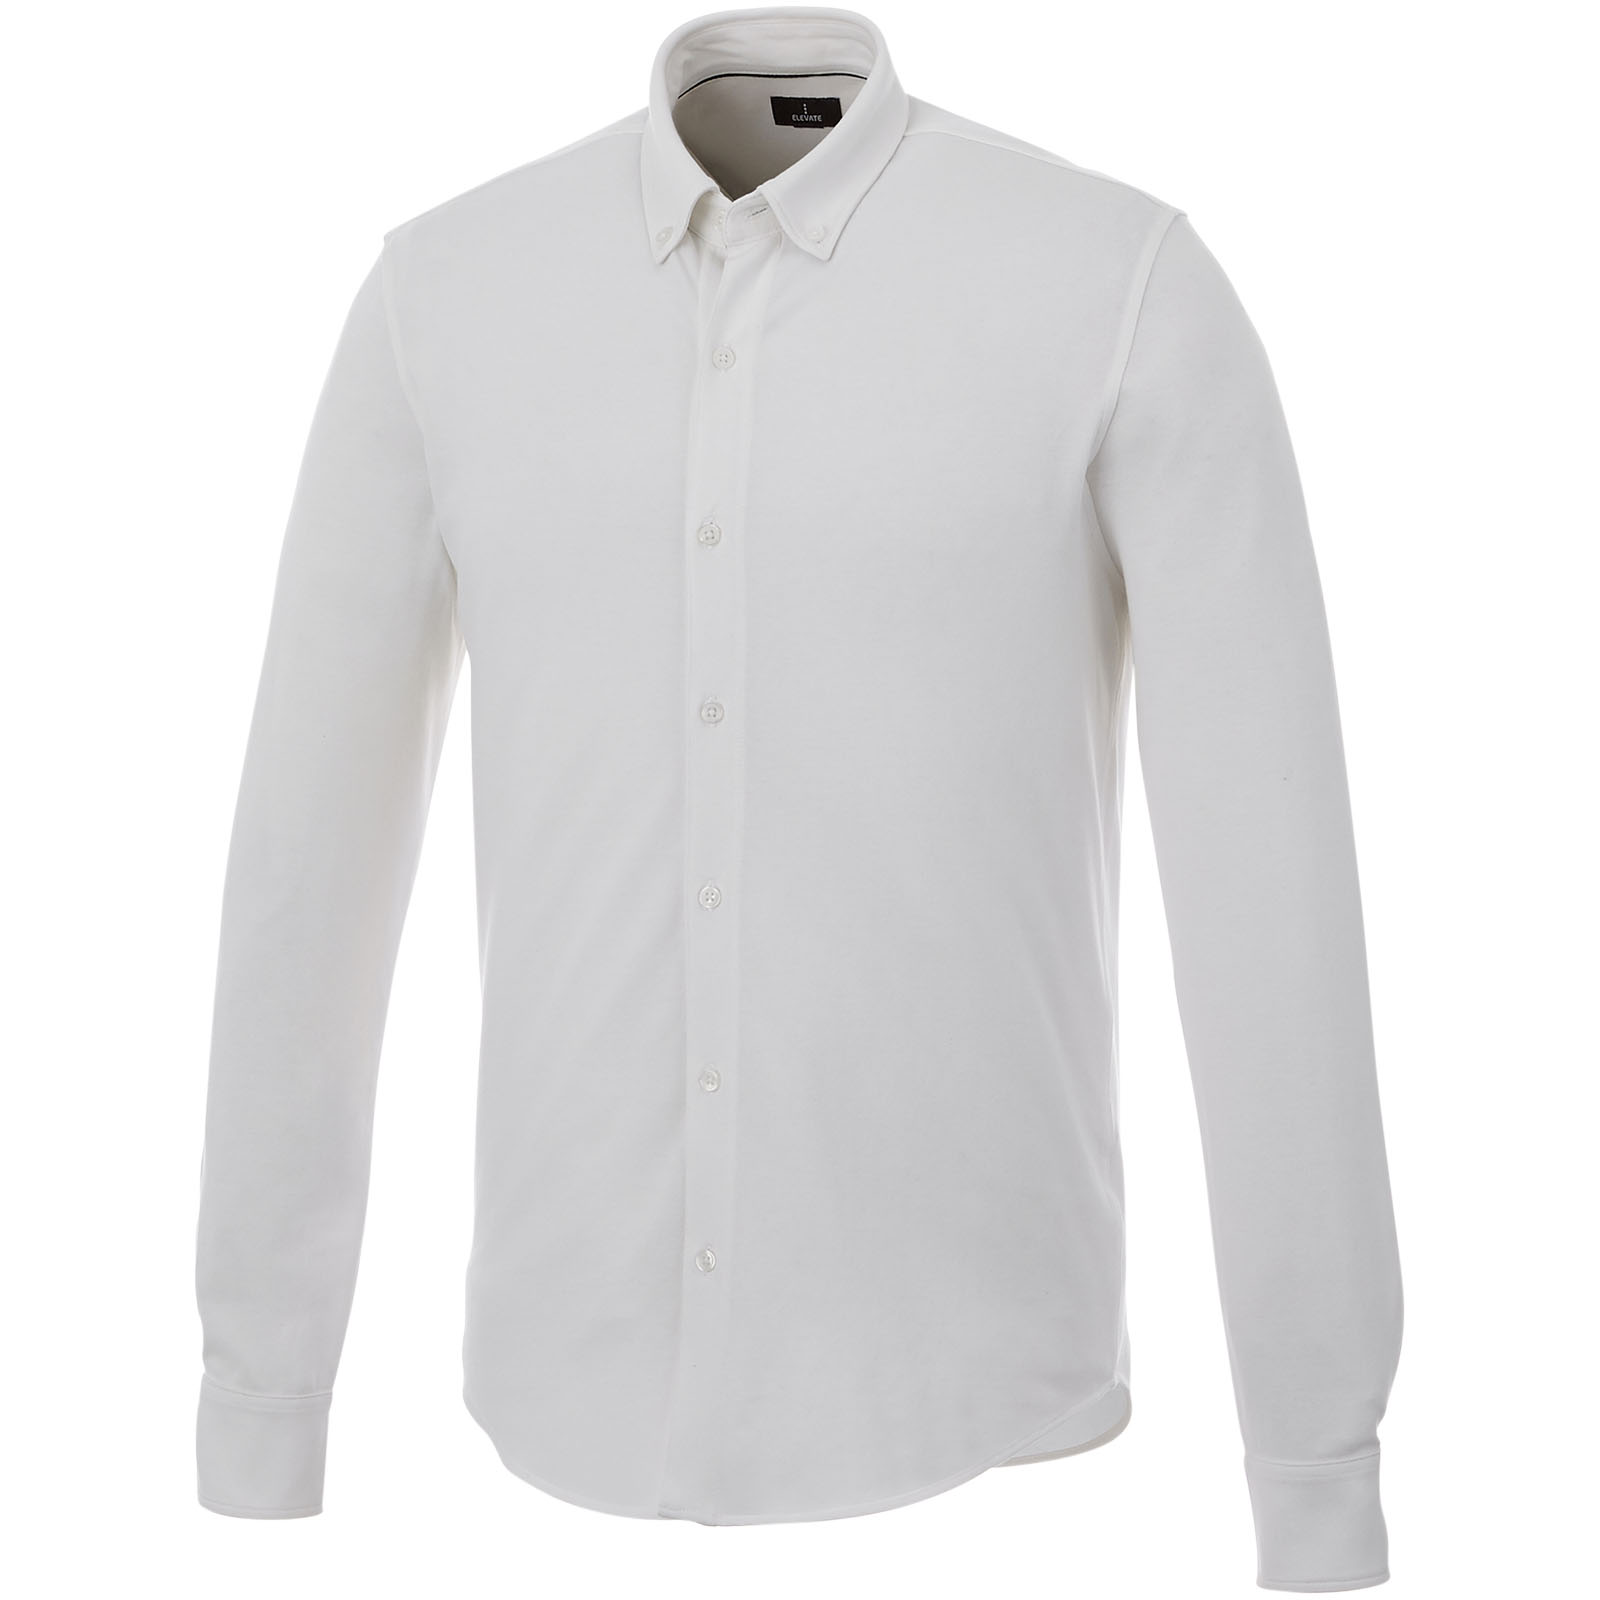 Clothing - Bigelow long sleeve men's pique shirt